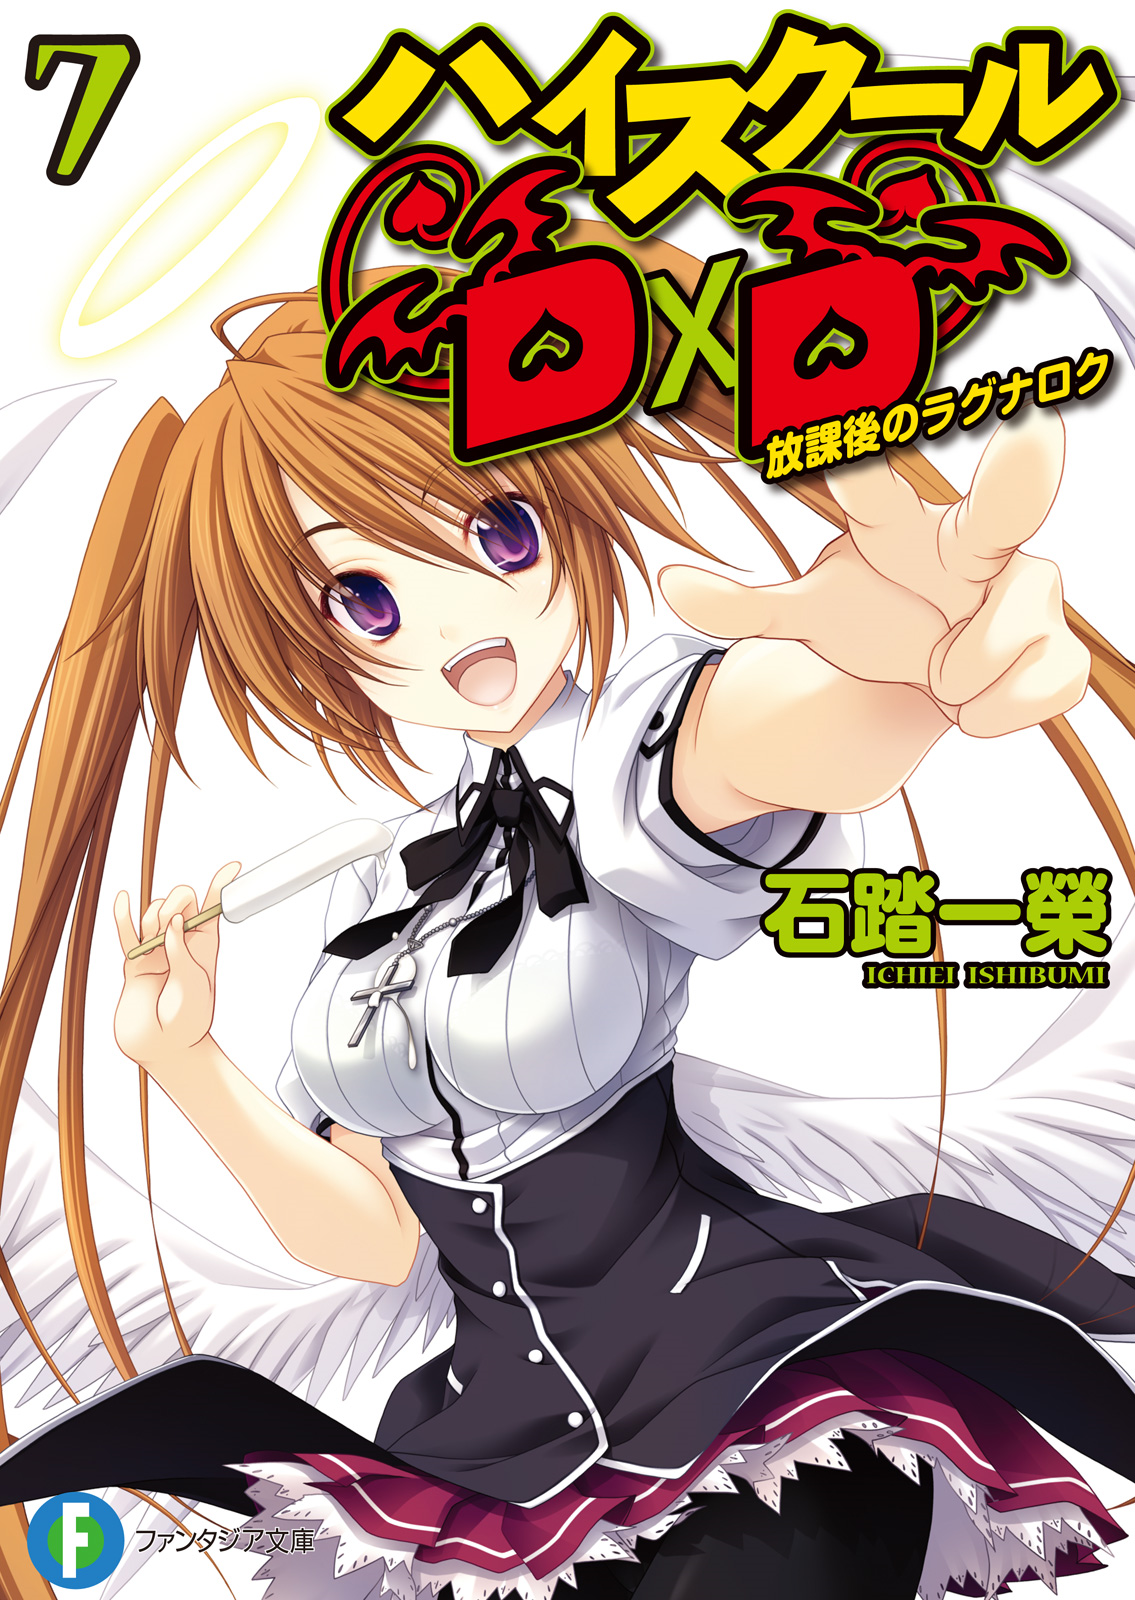 Manga Volume 4, High School DxD Wiki